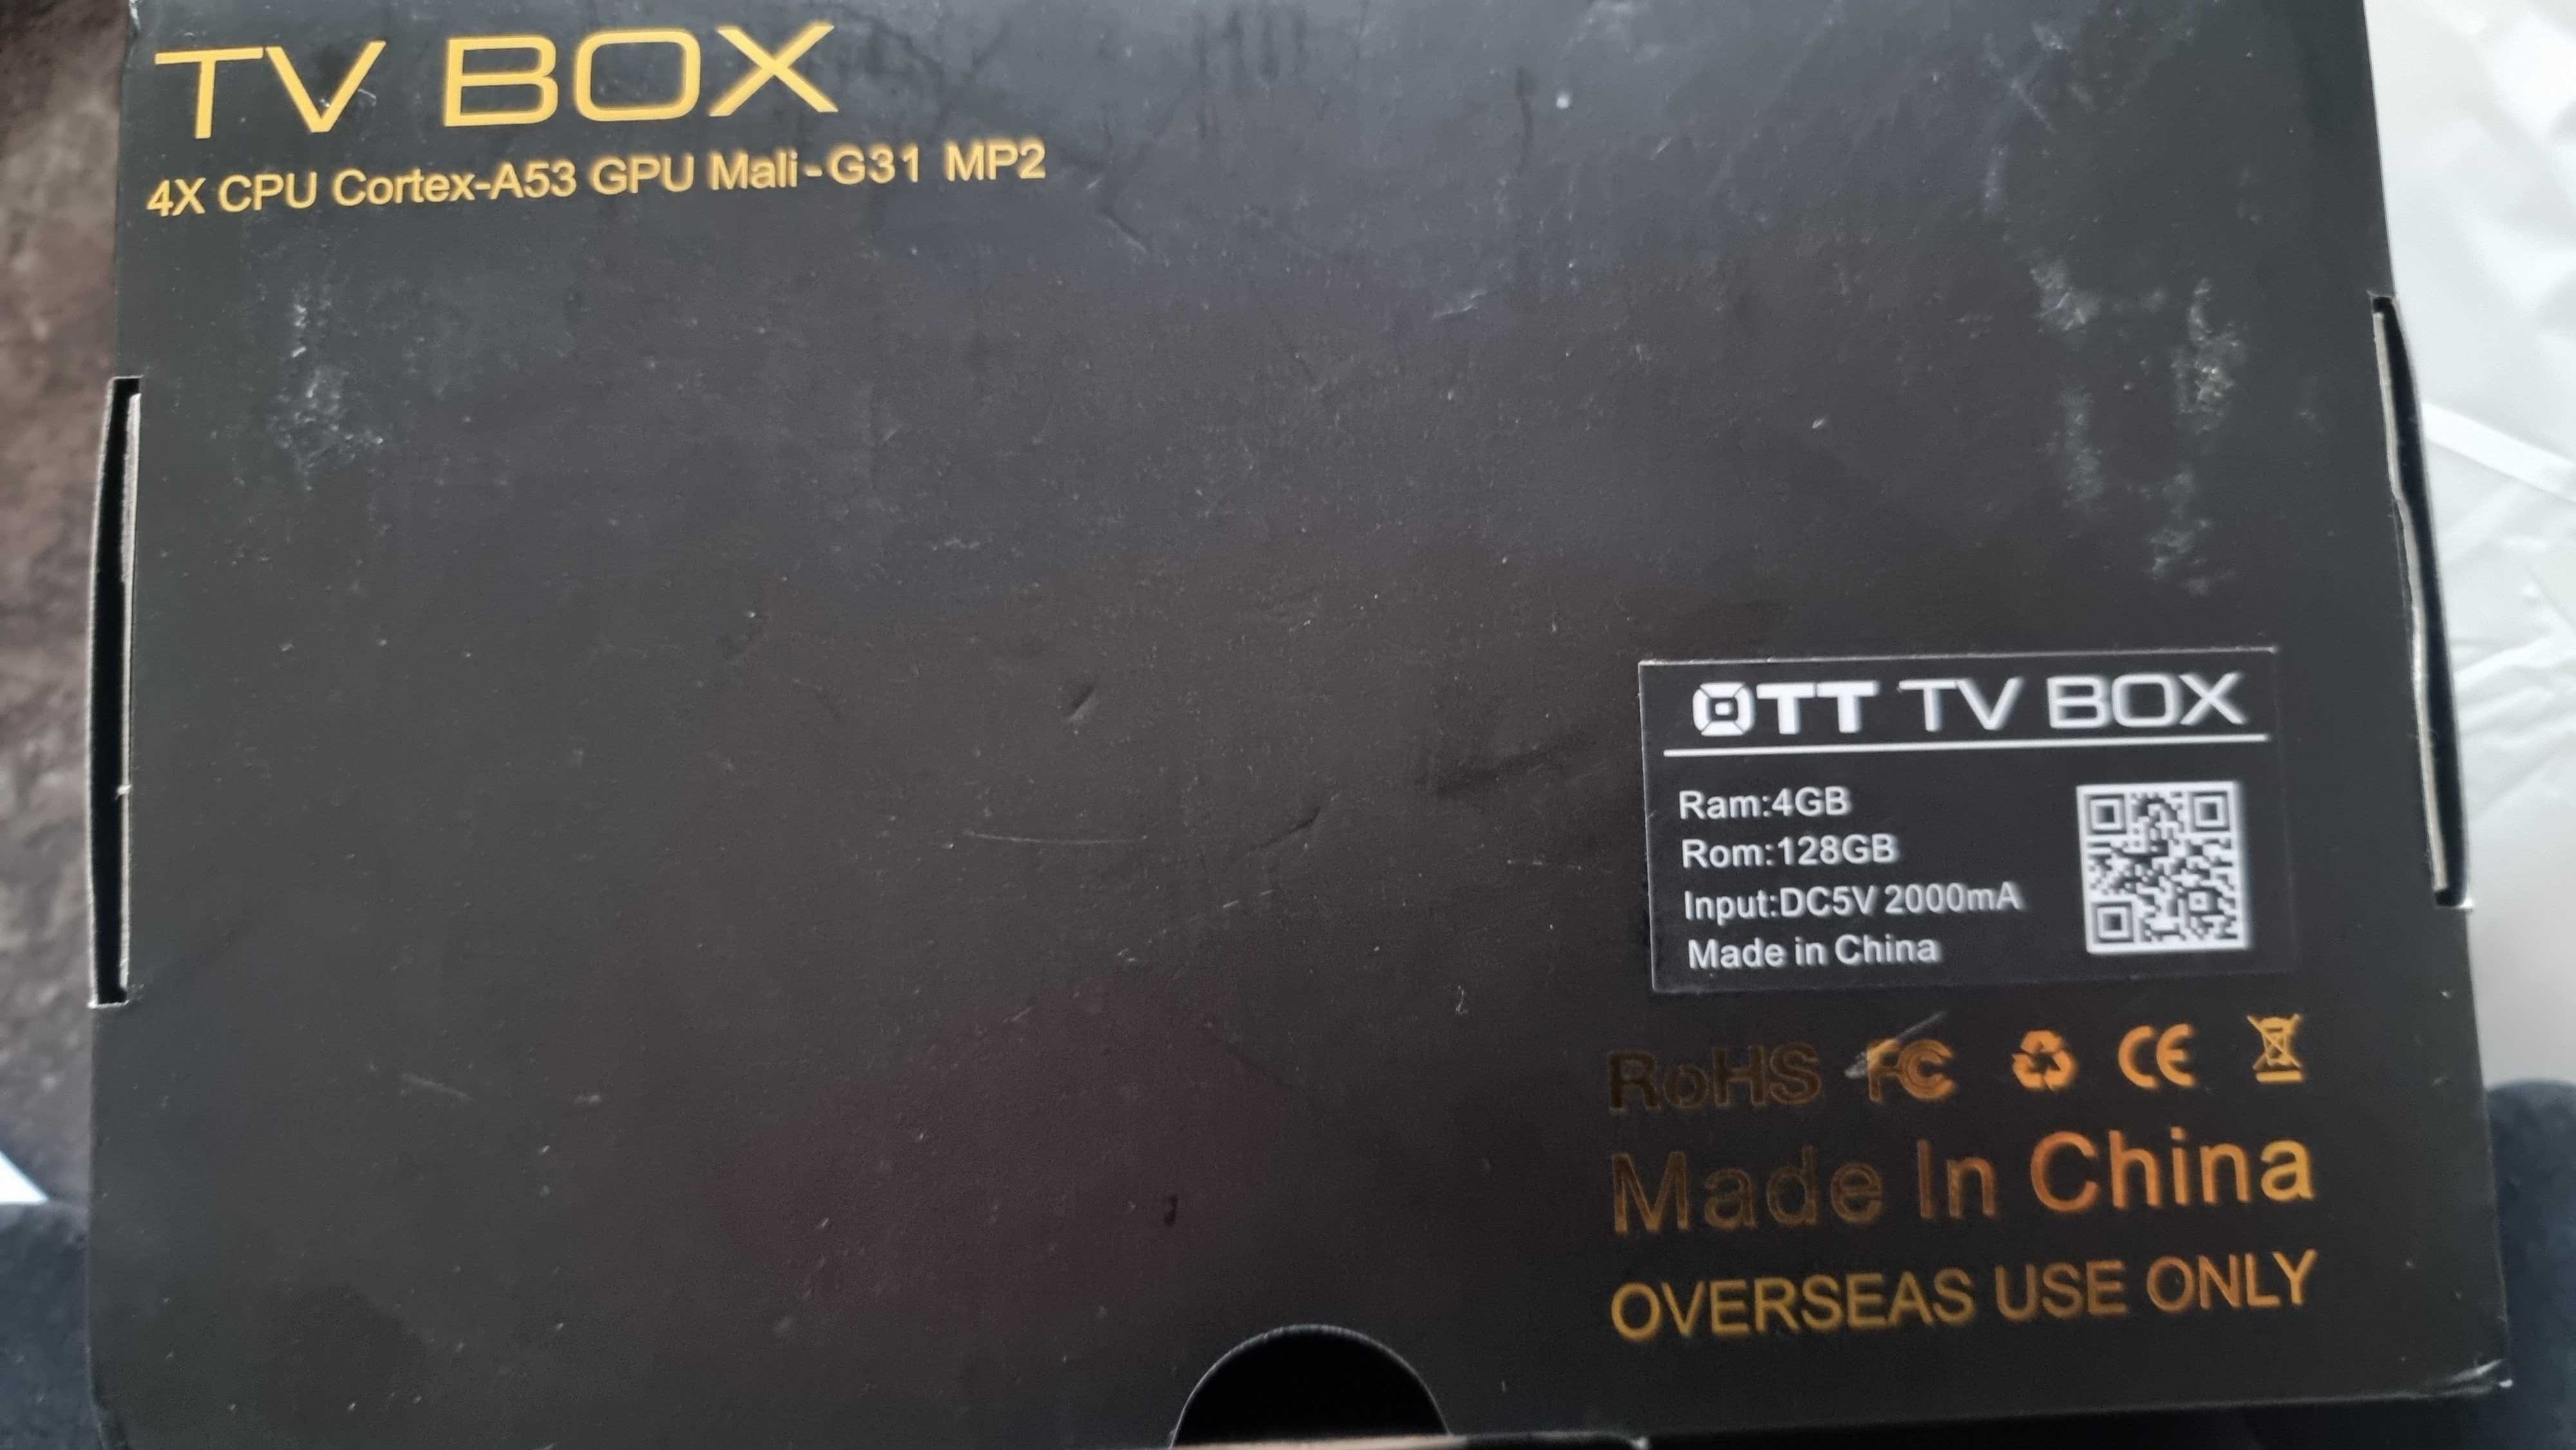 T95 SMART BOX TV android 4gb ram, 128 Gb Rom